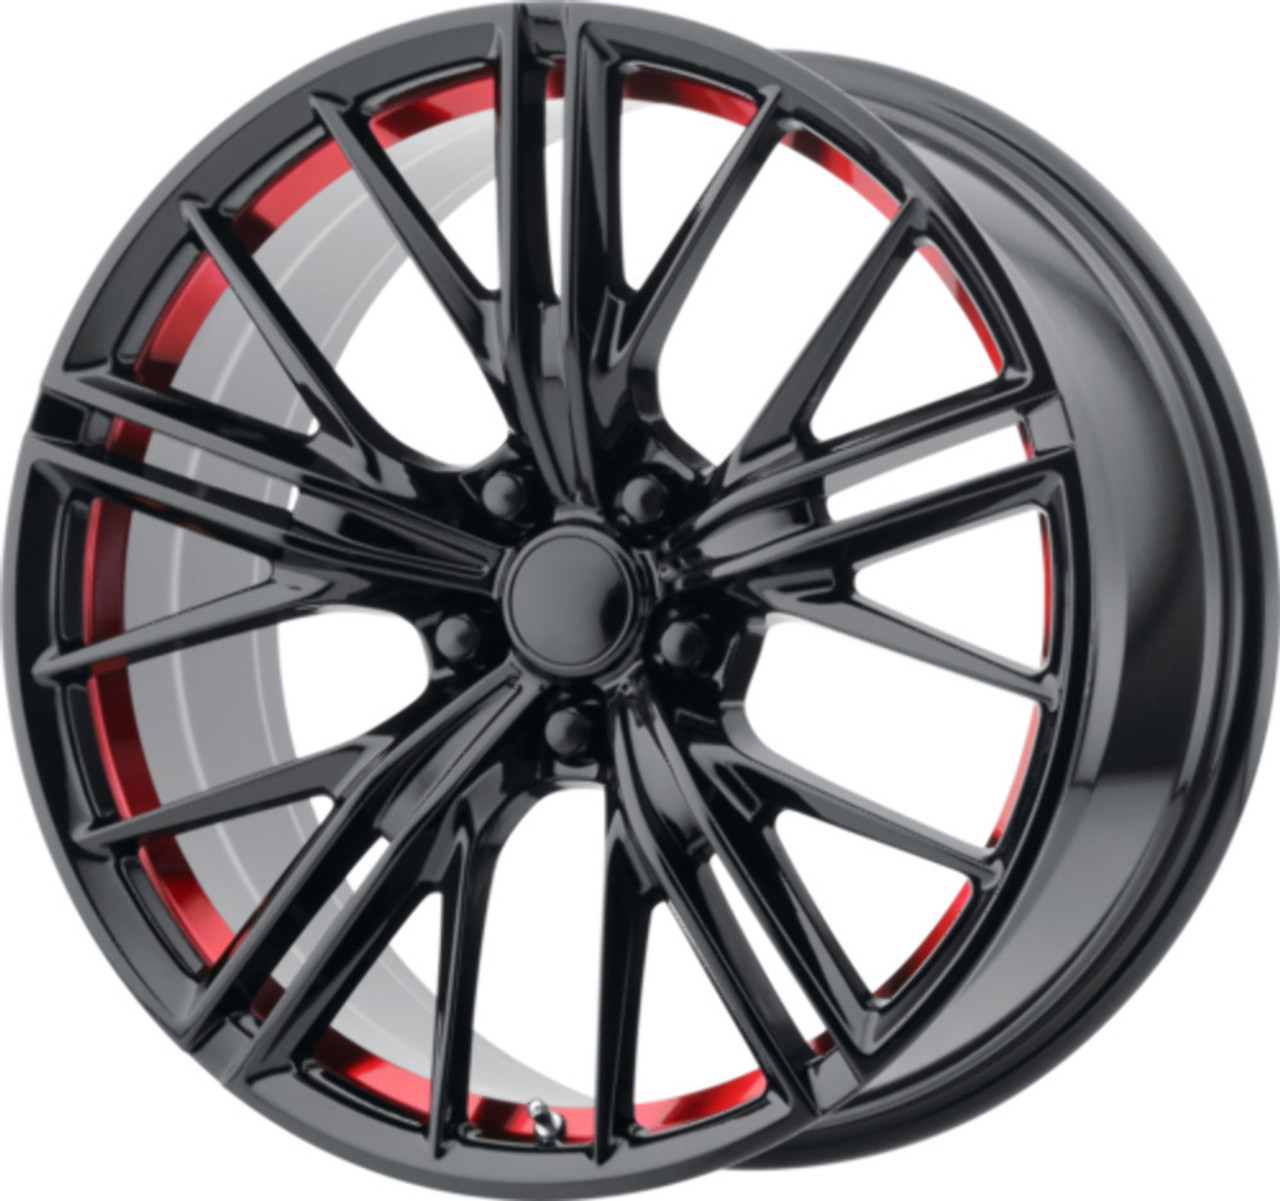 Set 4 Performance Replicas PR194 20x9 5x120 Black Red Machined Wheels 20" 30mm